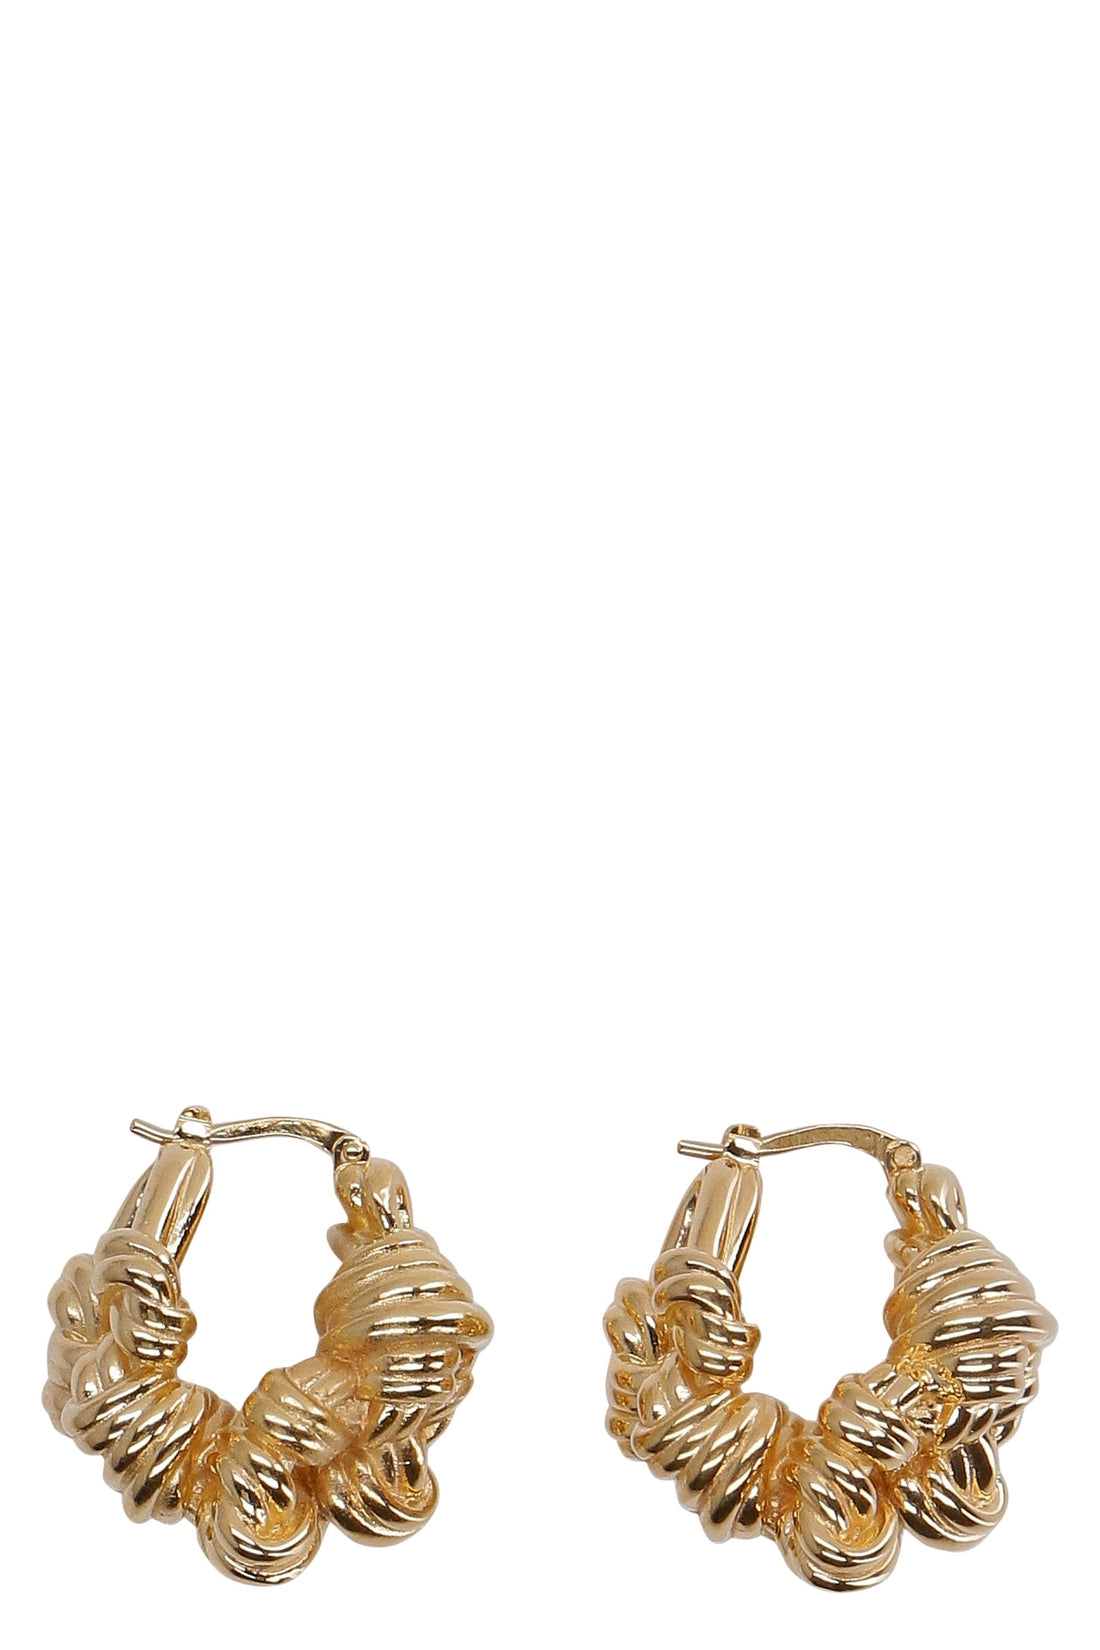 Bottega Veneta-OUTLET-SALE-Knot earrings-ARCHIVIST